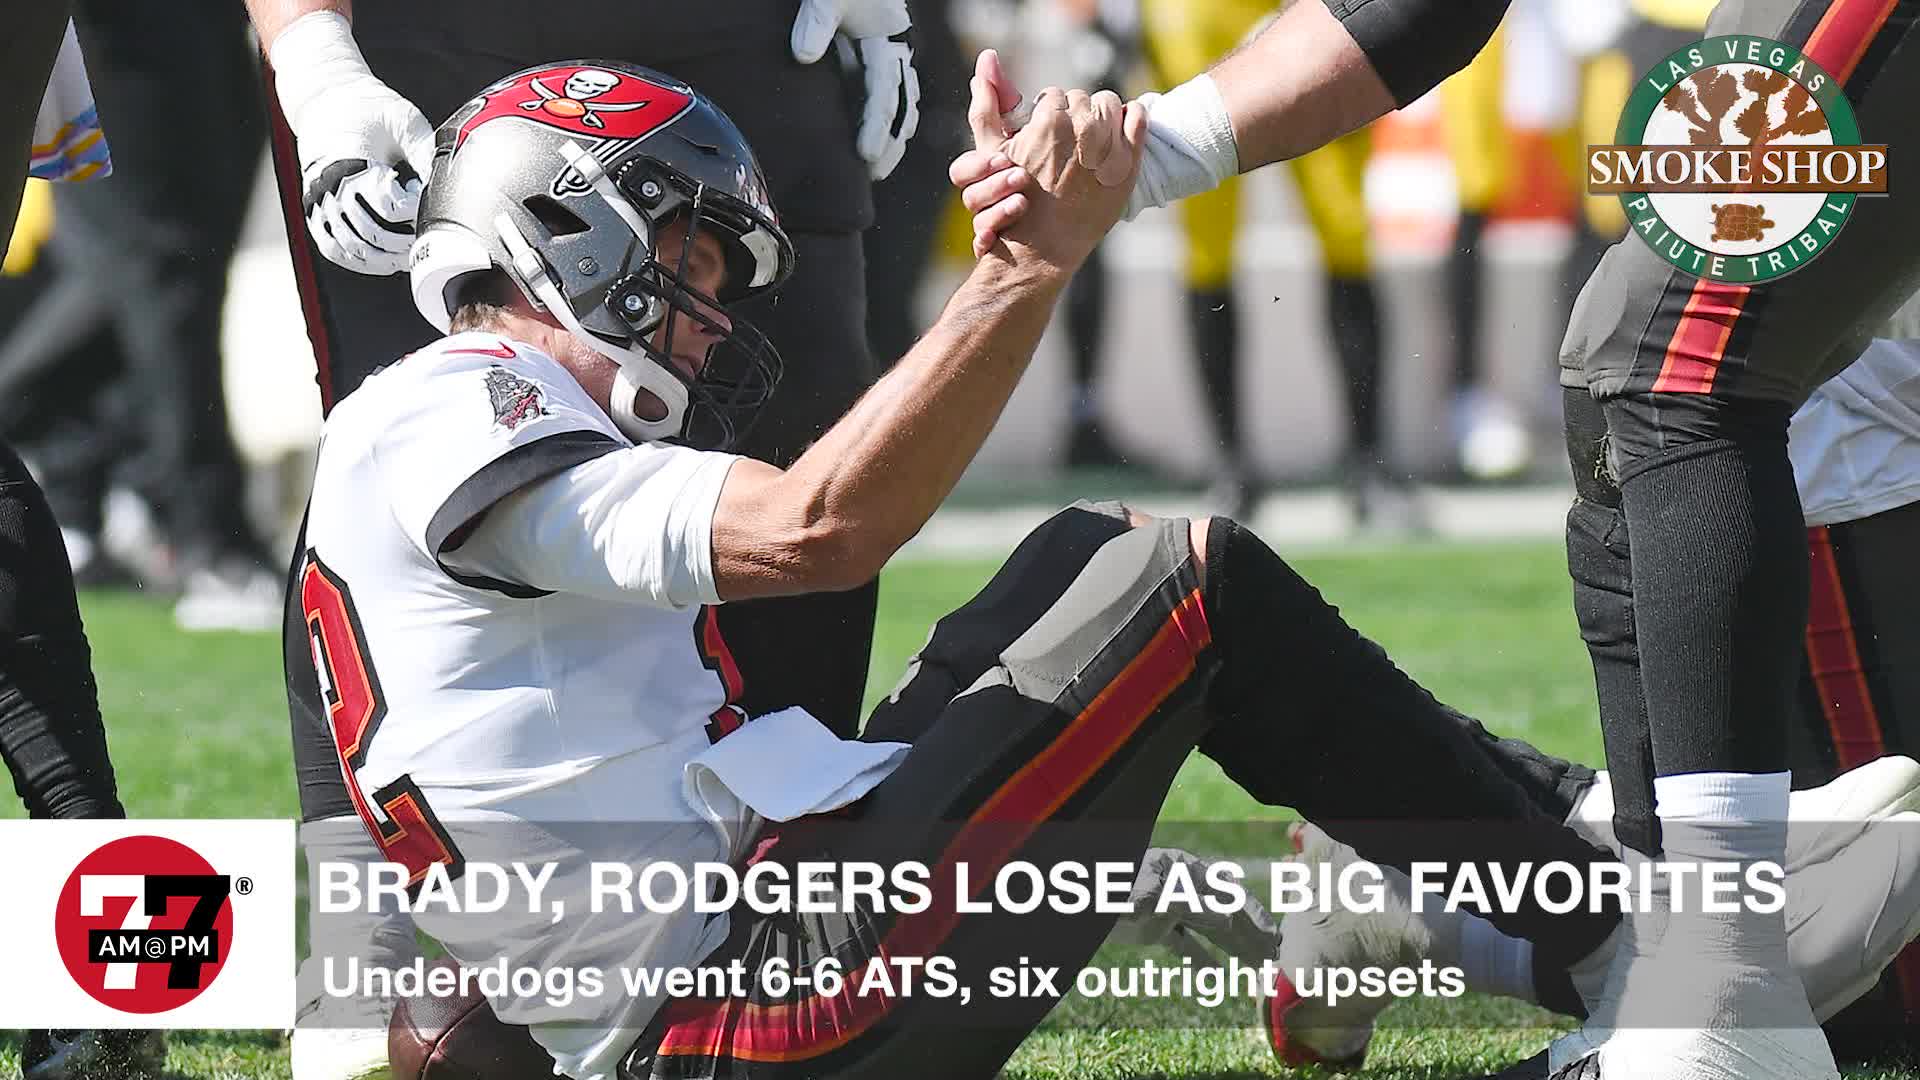 Brady, Rodgers lose big as favorites